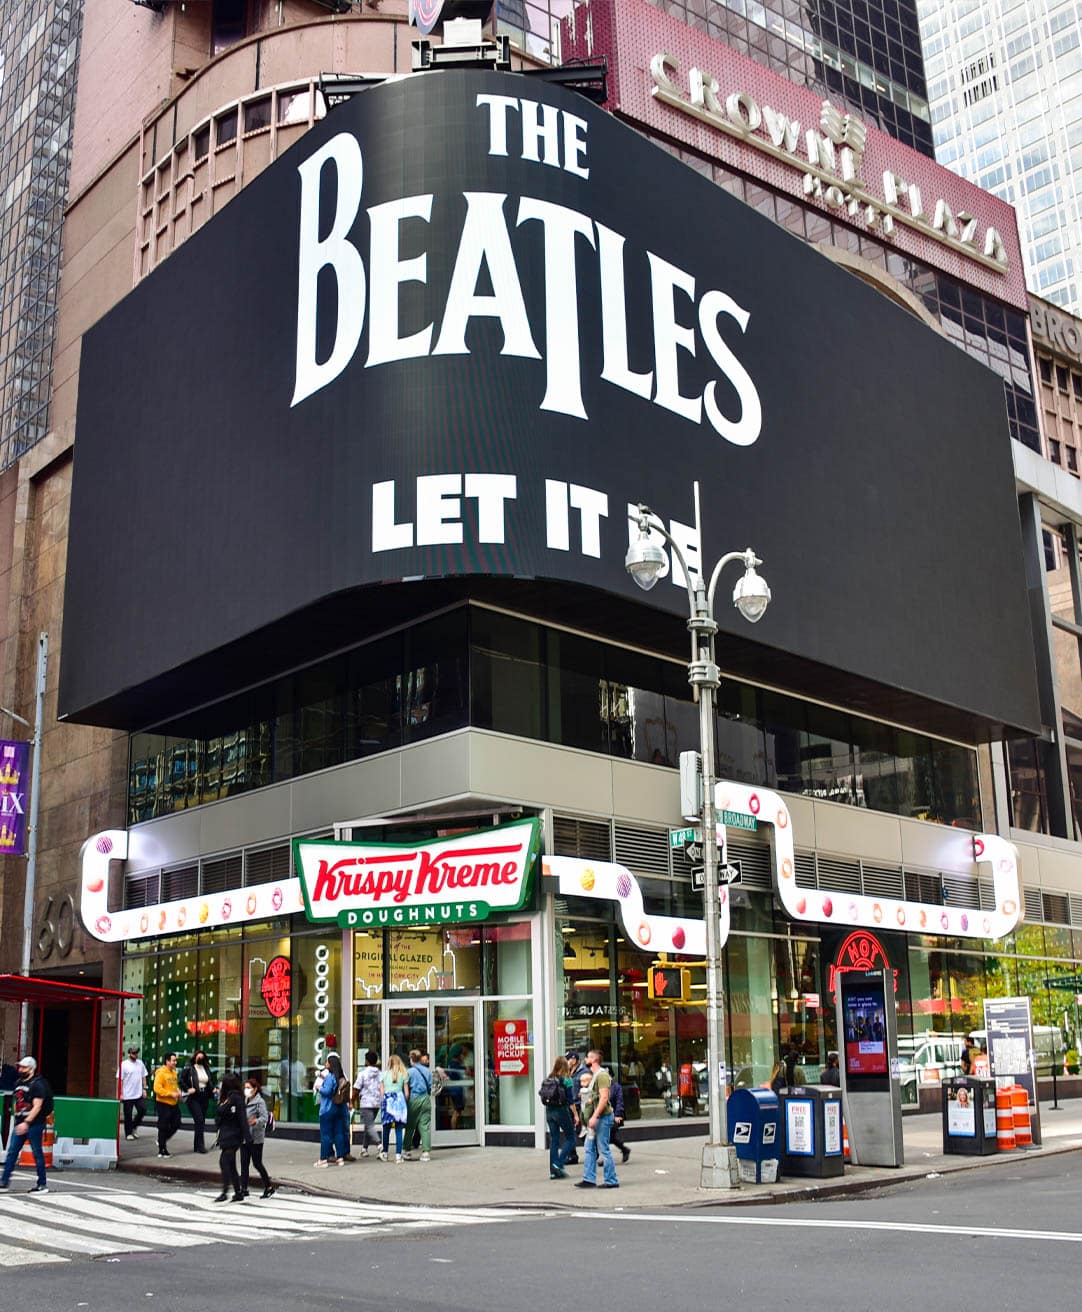 The Beatles Digital Billboard